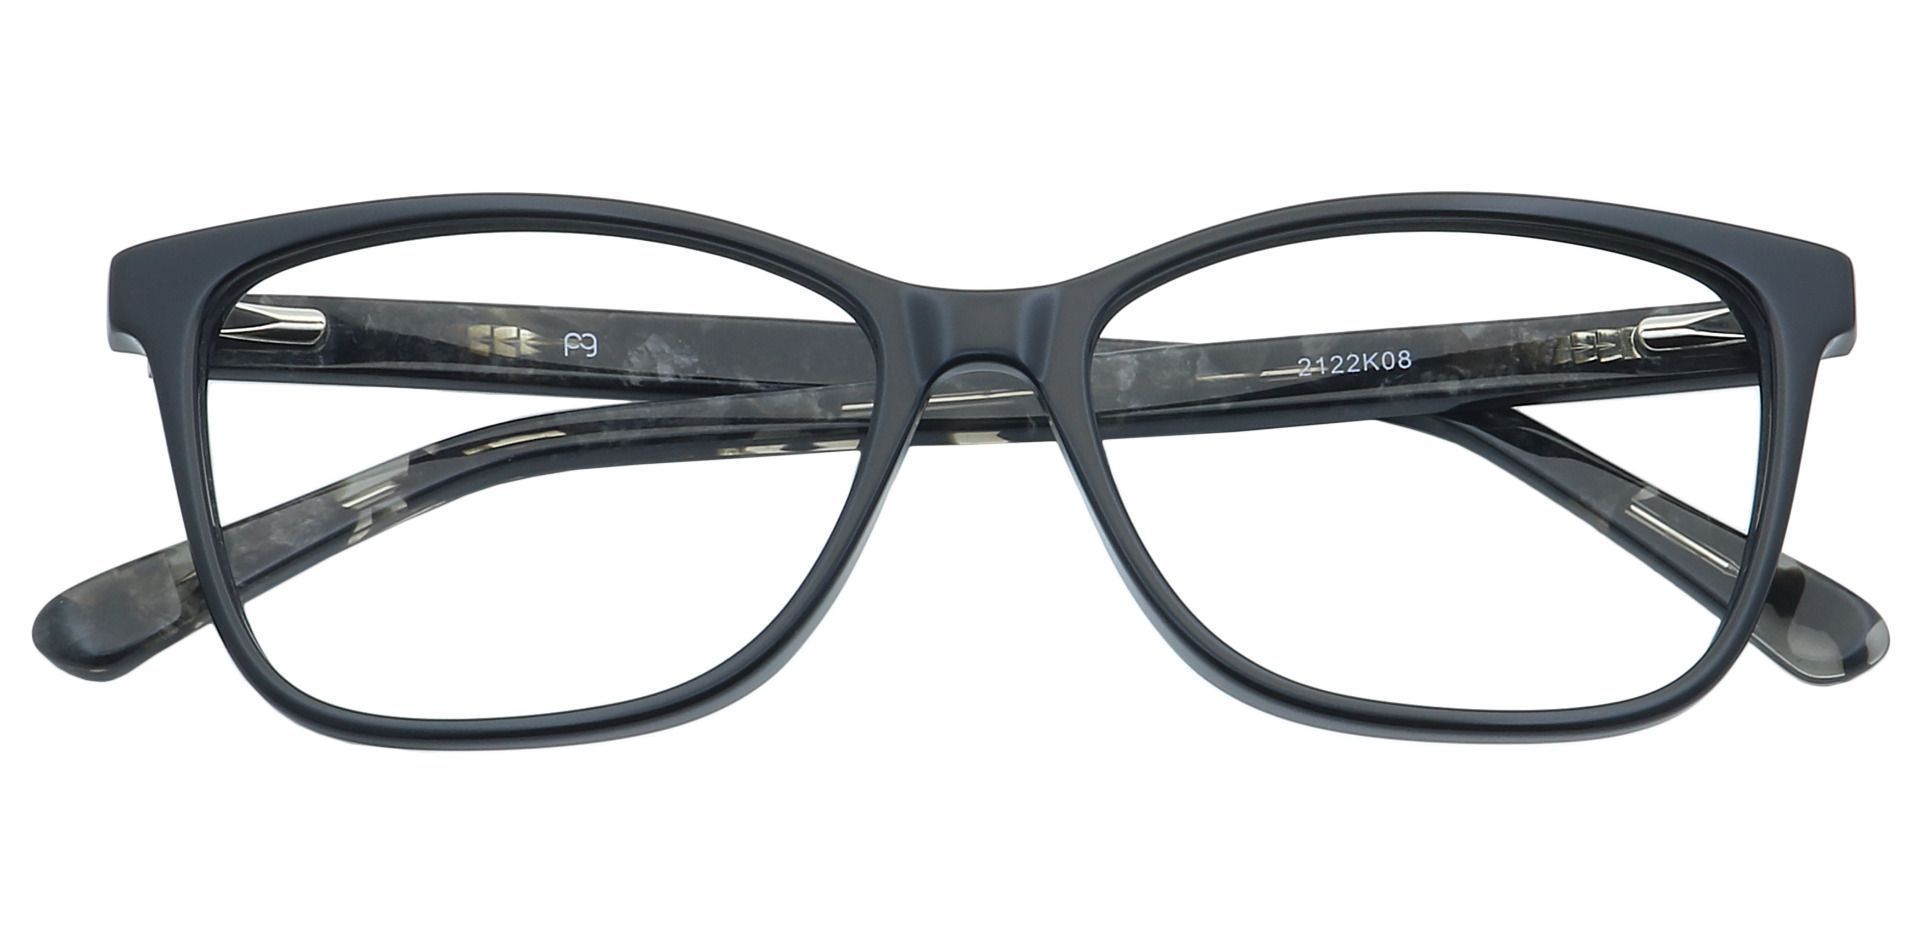 Casper Rectangle Prescription Glasses - Black